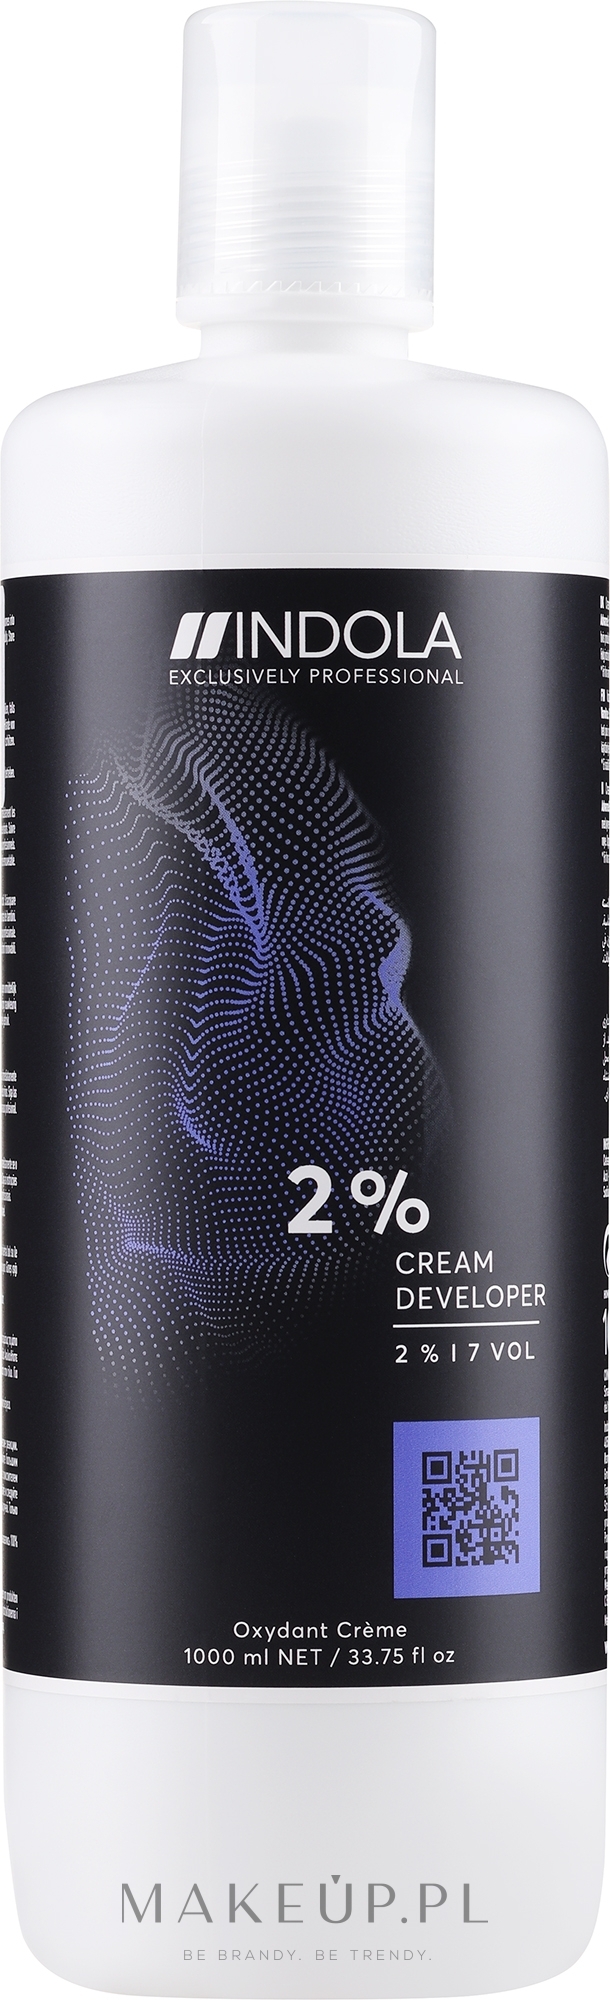 Krem-utleniacz 2% 7 vol. - Indola Profession Cream Developer 2% 7 vol — Zdjęcie 1000 ml